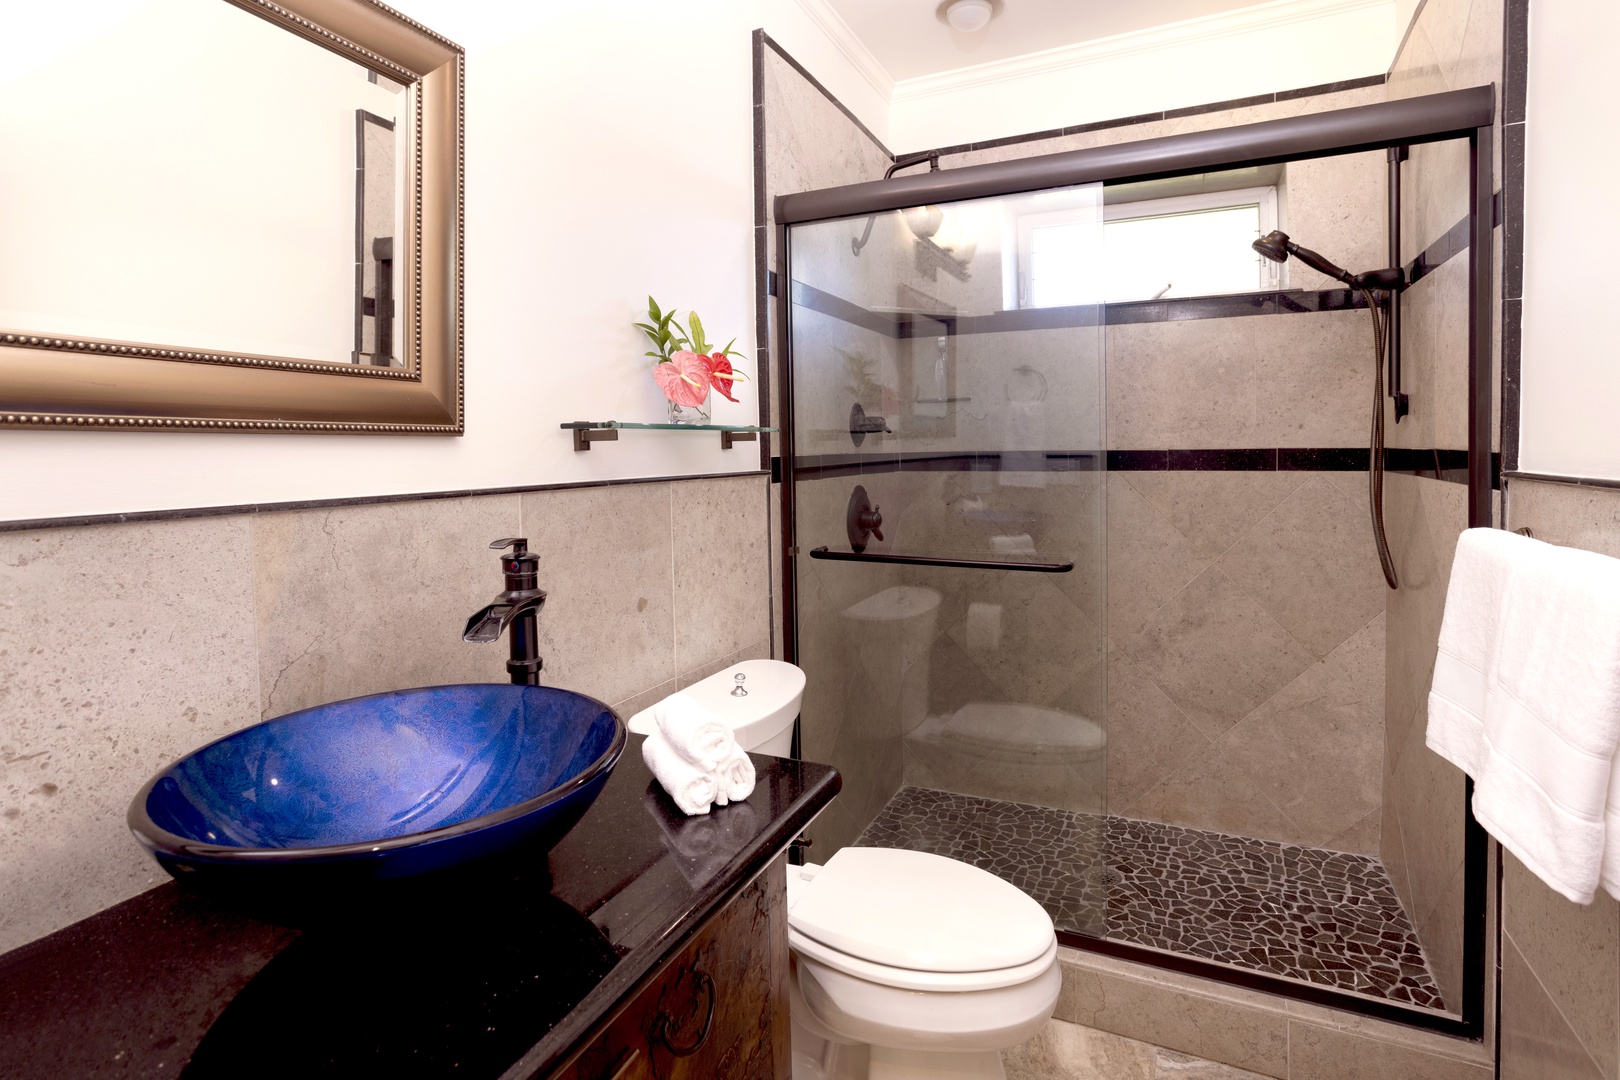 Kailua Vacation Rentals, Mokulua Seaside - Ensuite bathroom with a chic vanity space